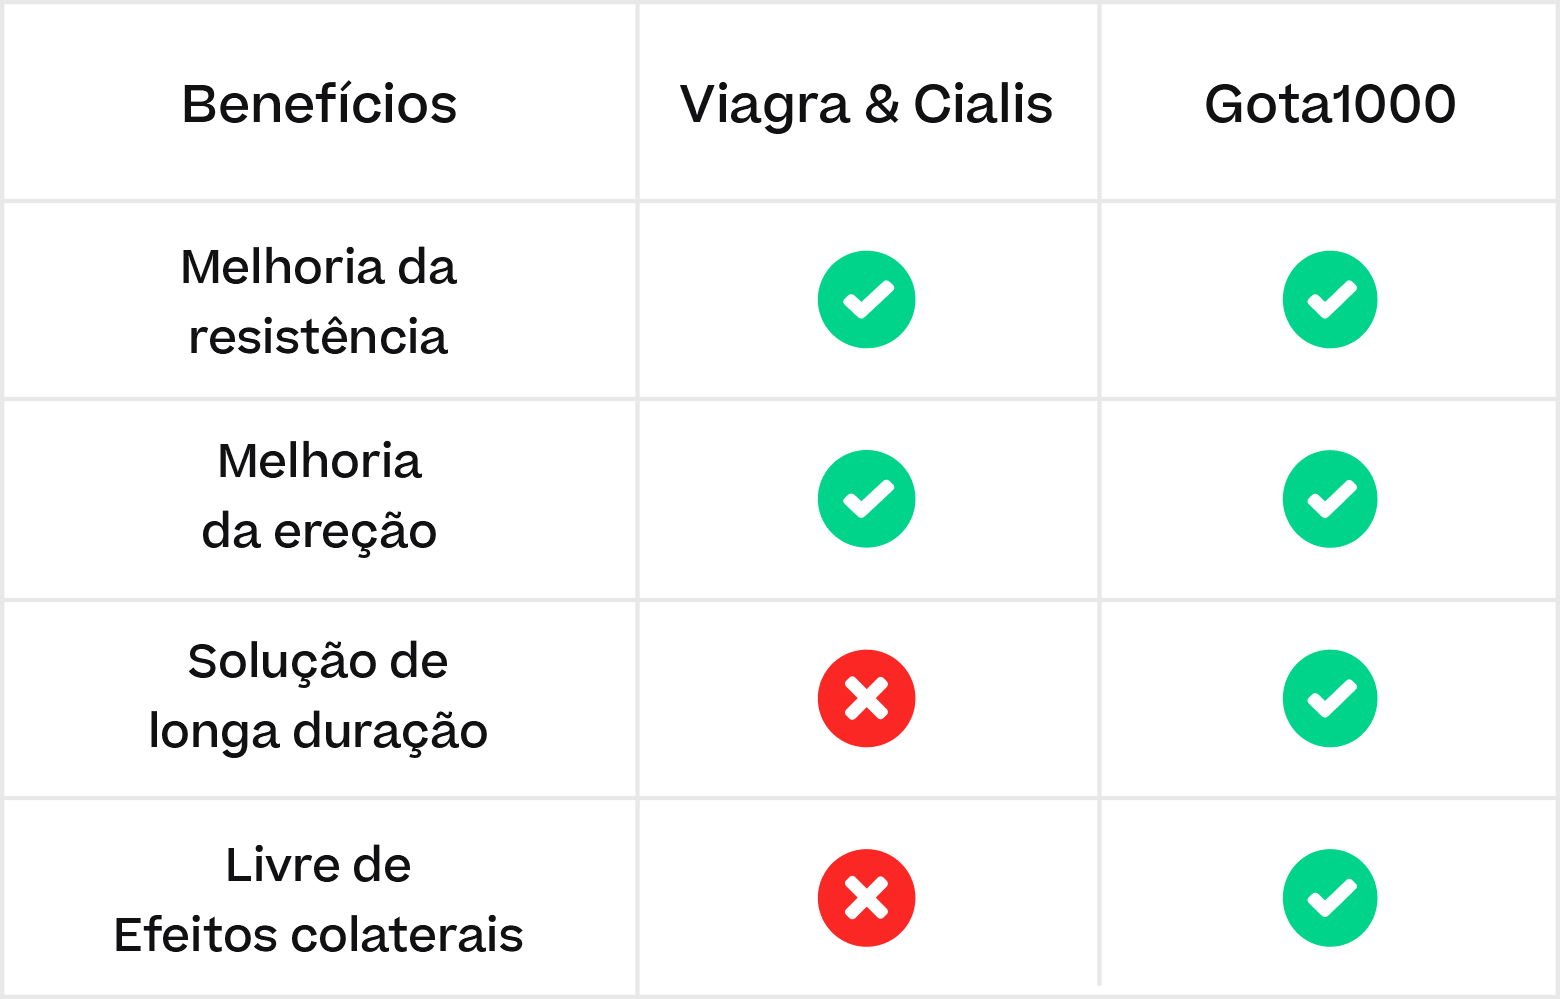 Viagra vs Cialis vs Gota1000